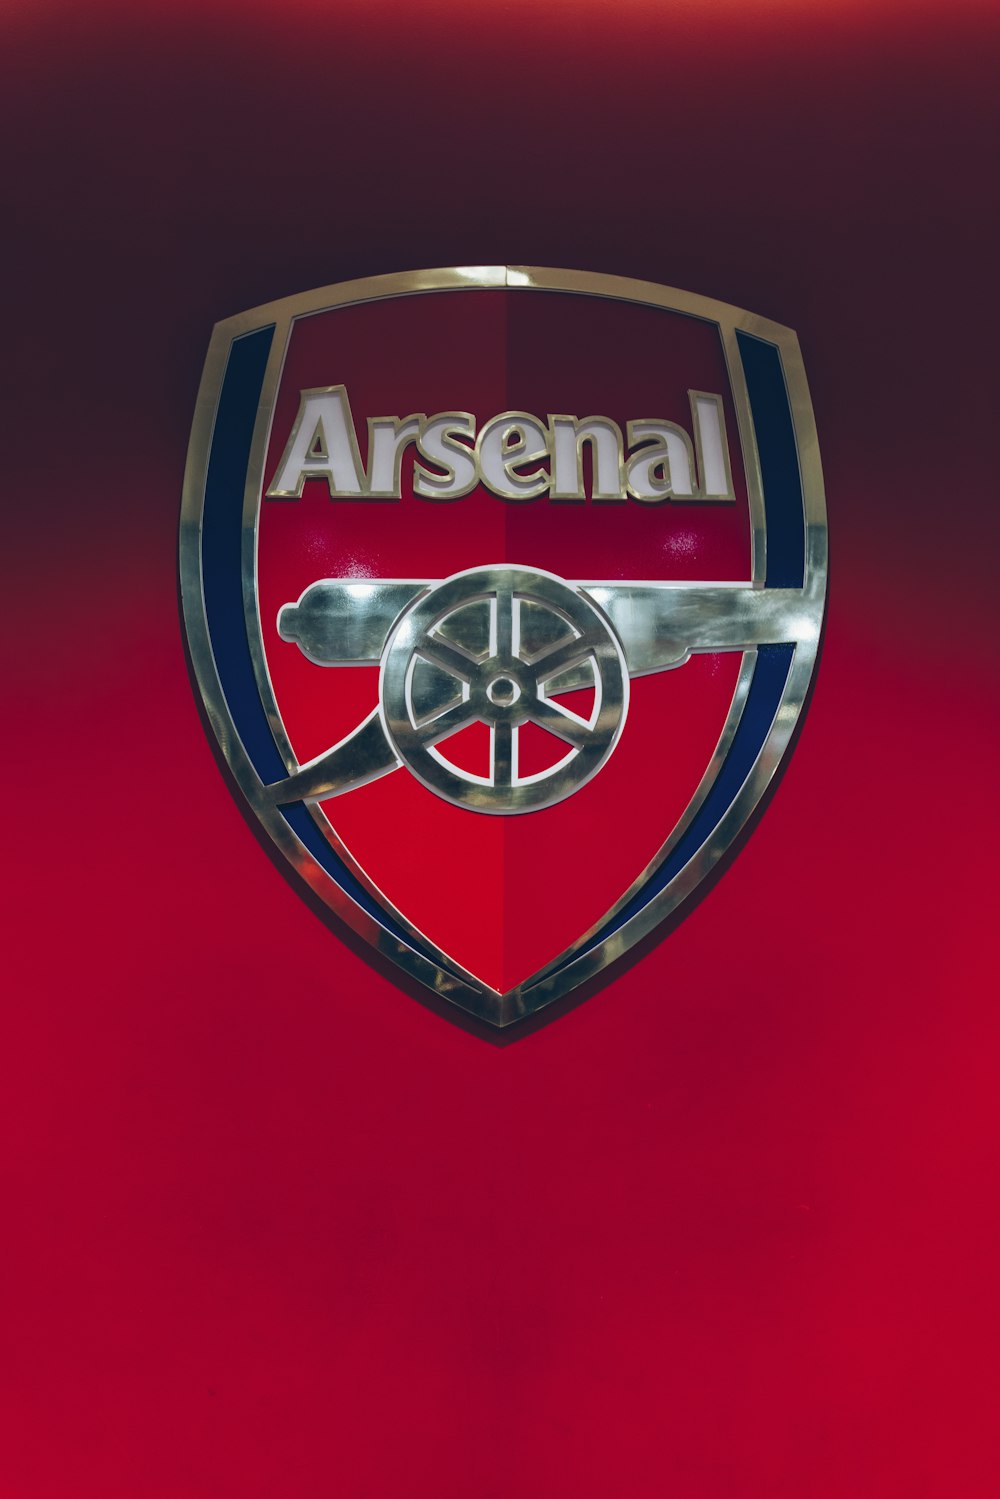 Arsenal Logo Pictures | Download Free Images on Unsplash